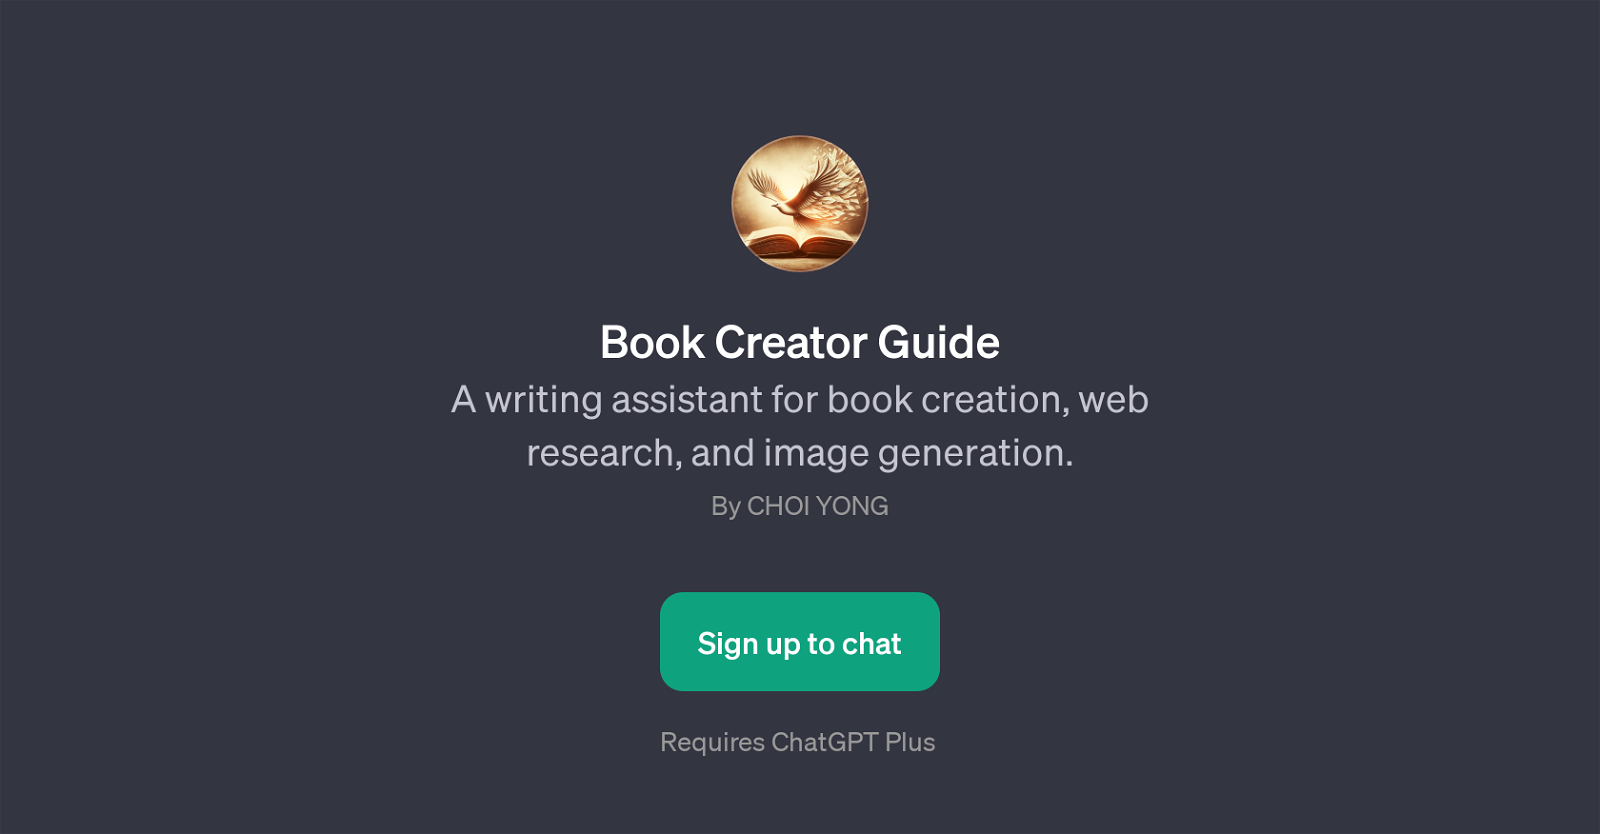 Book Creator Guide website